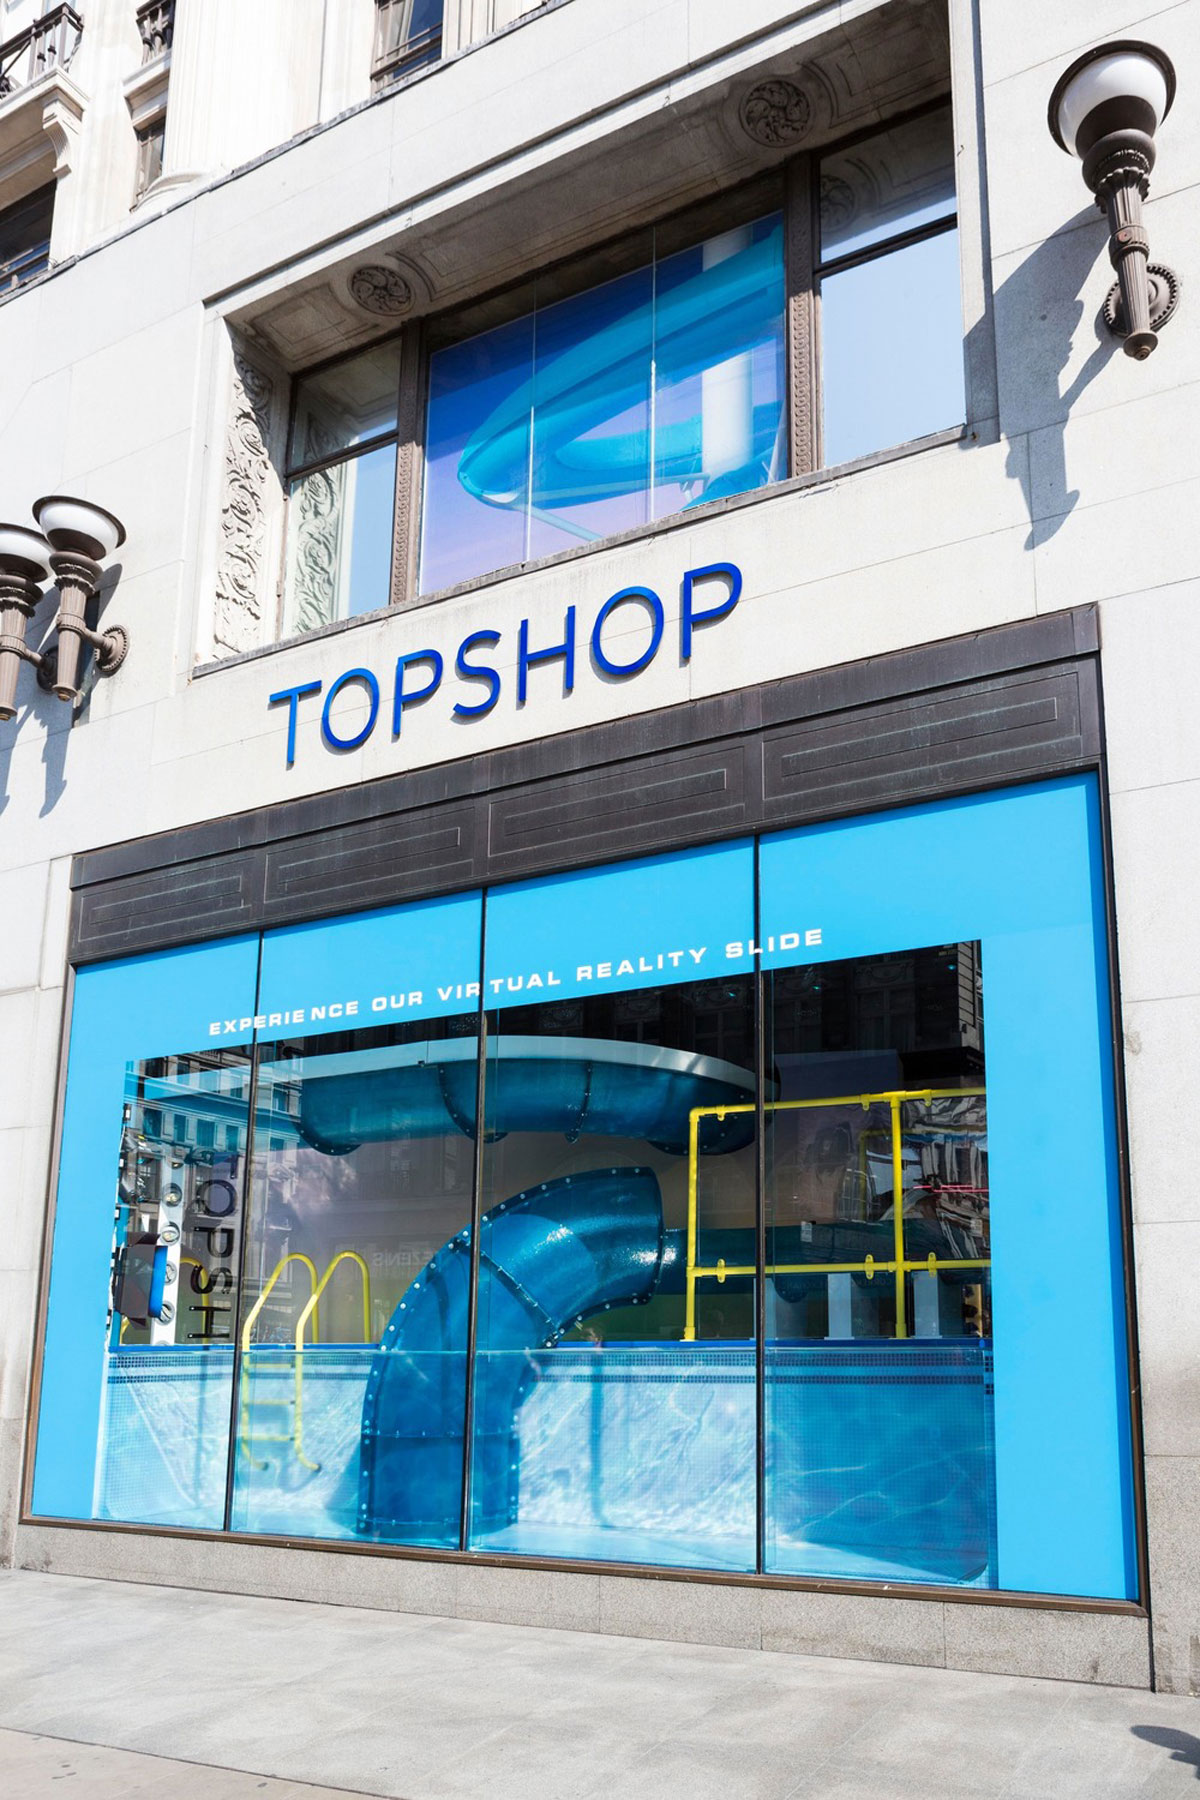 TopShop Splash! retail VR experience by YourStudio